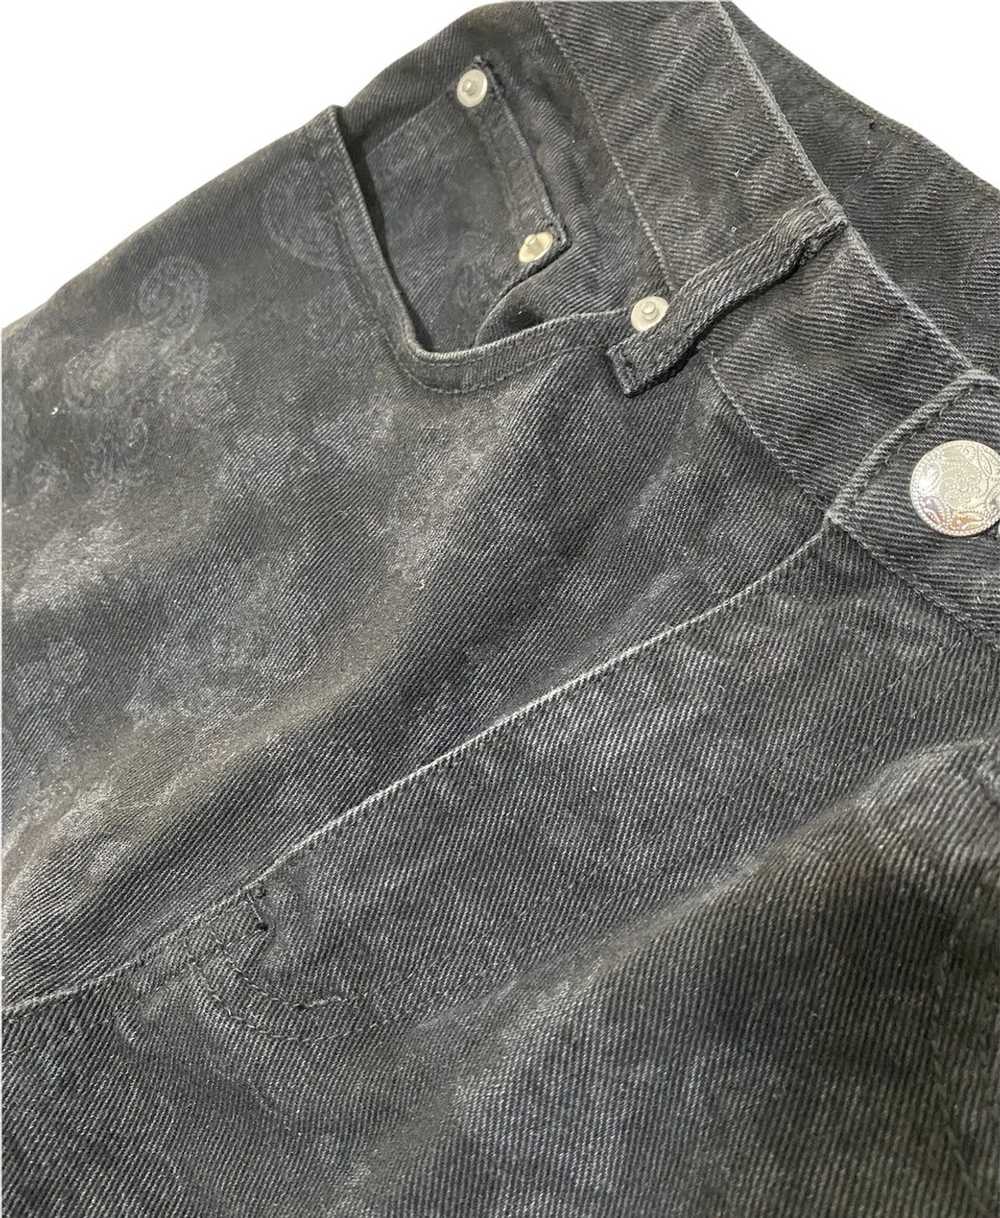 Japanese Brand Laser imprinted bandana print jeans - image 4